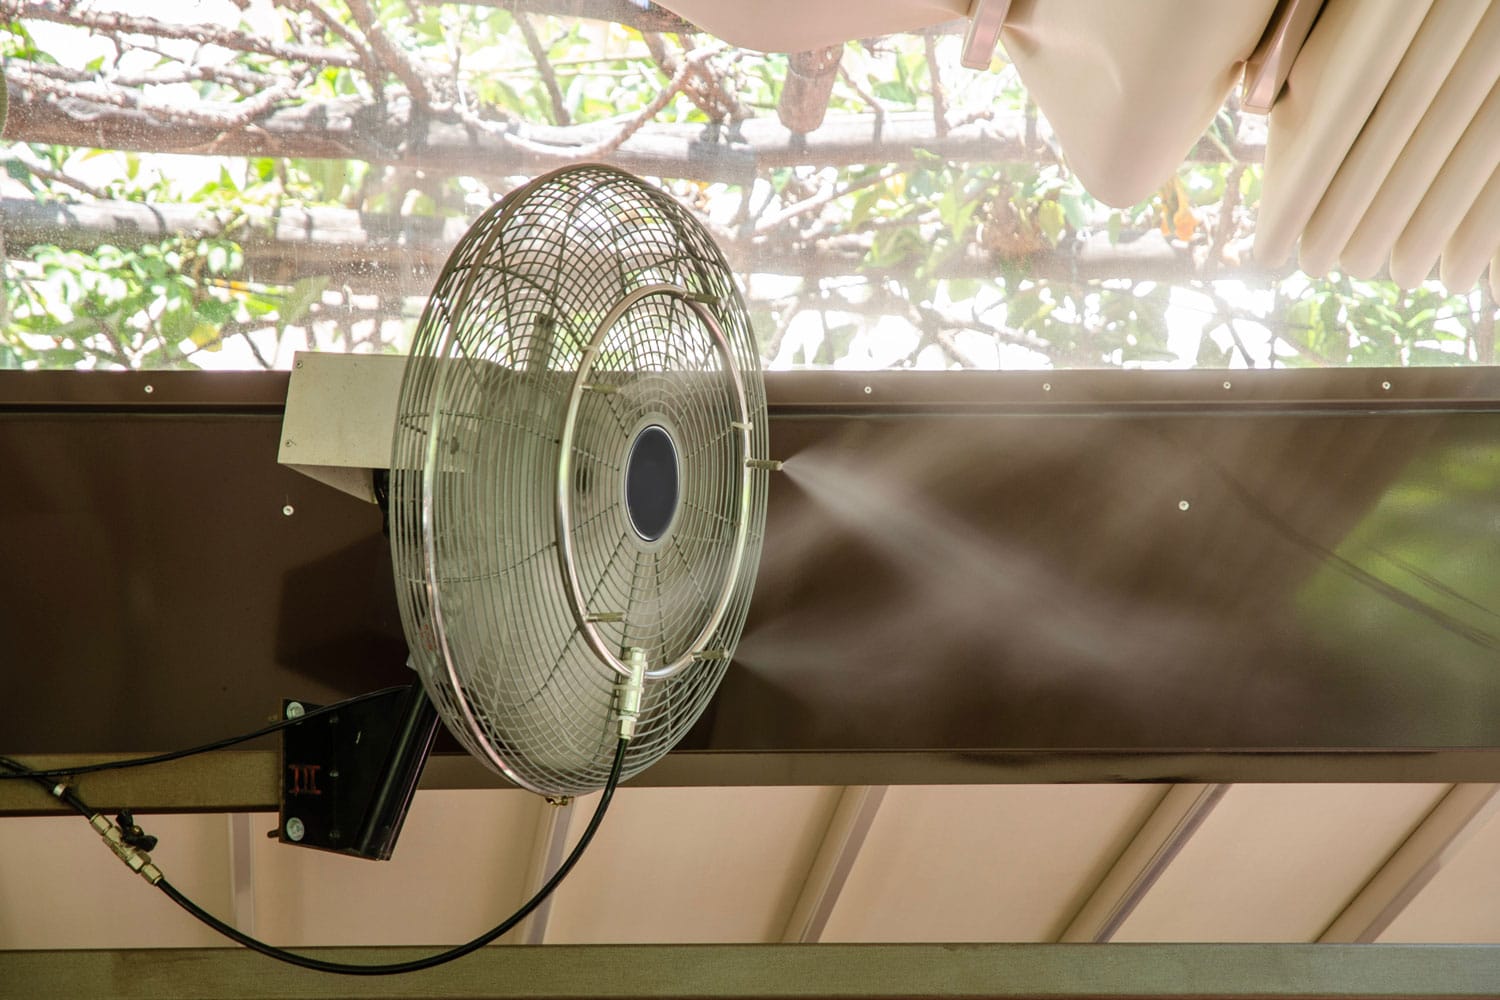 A misting fan turned on inside a room